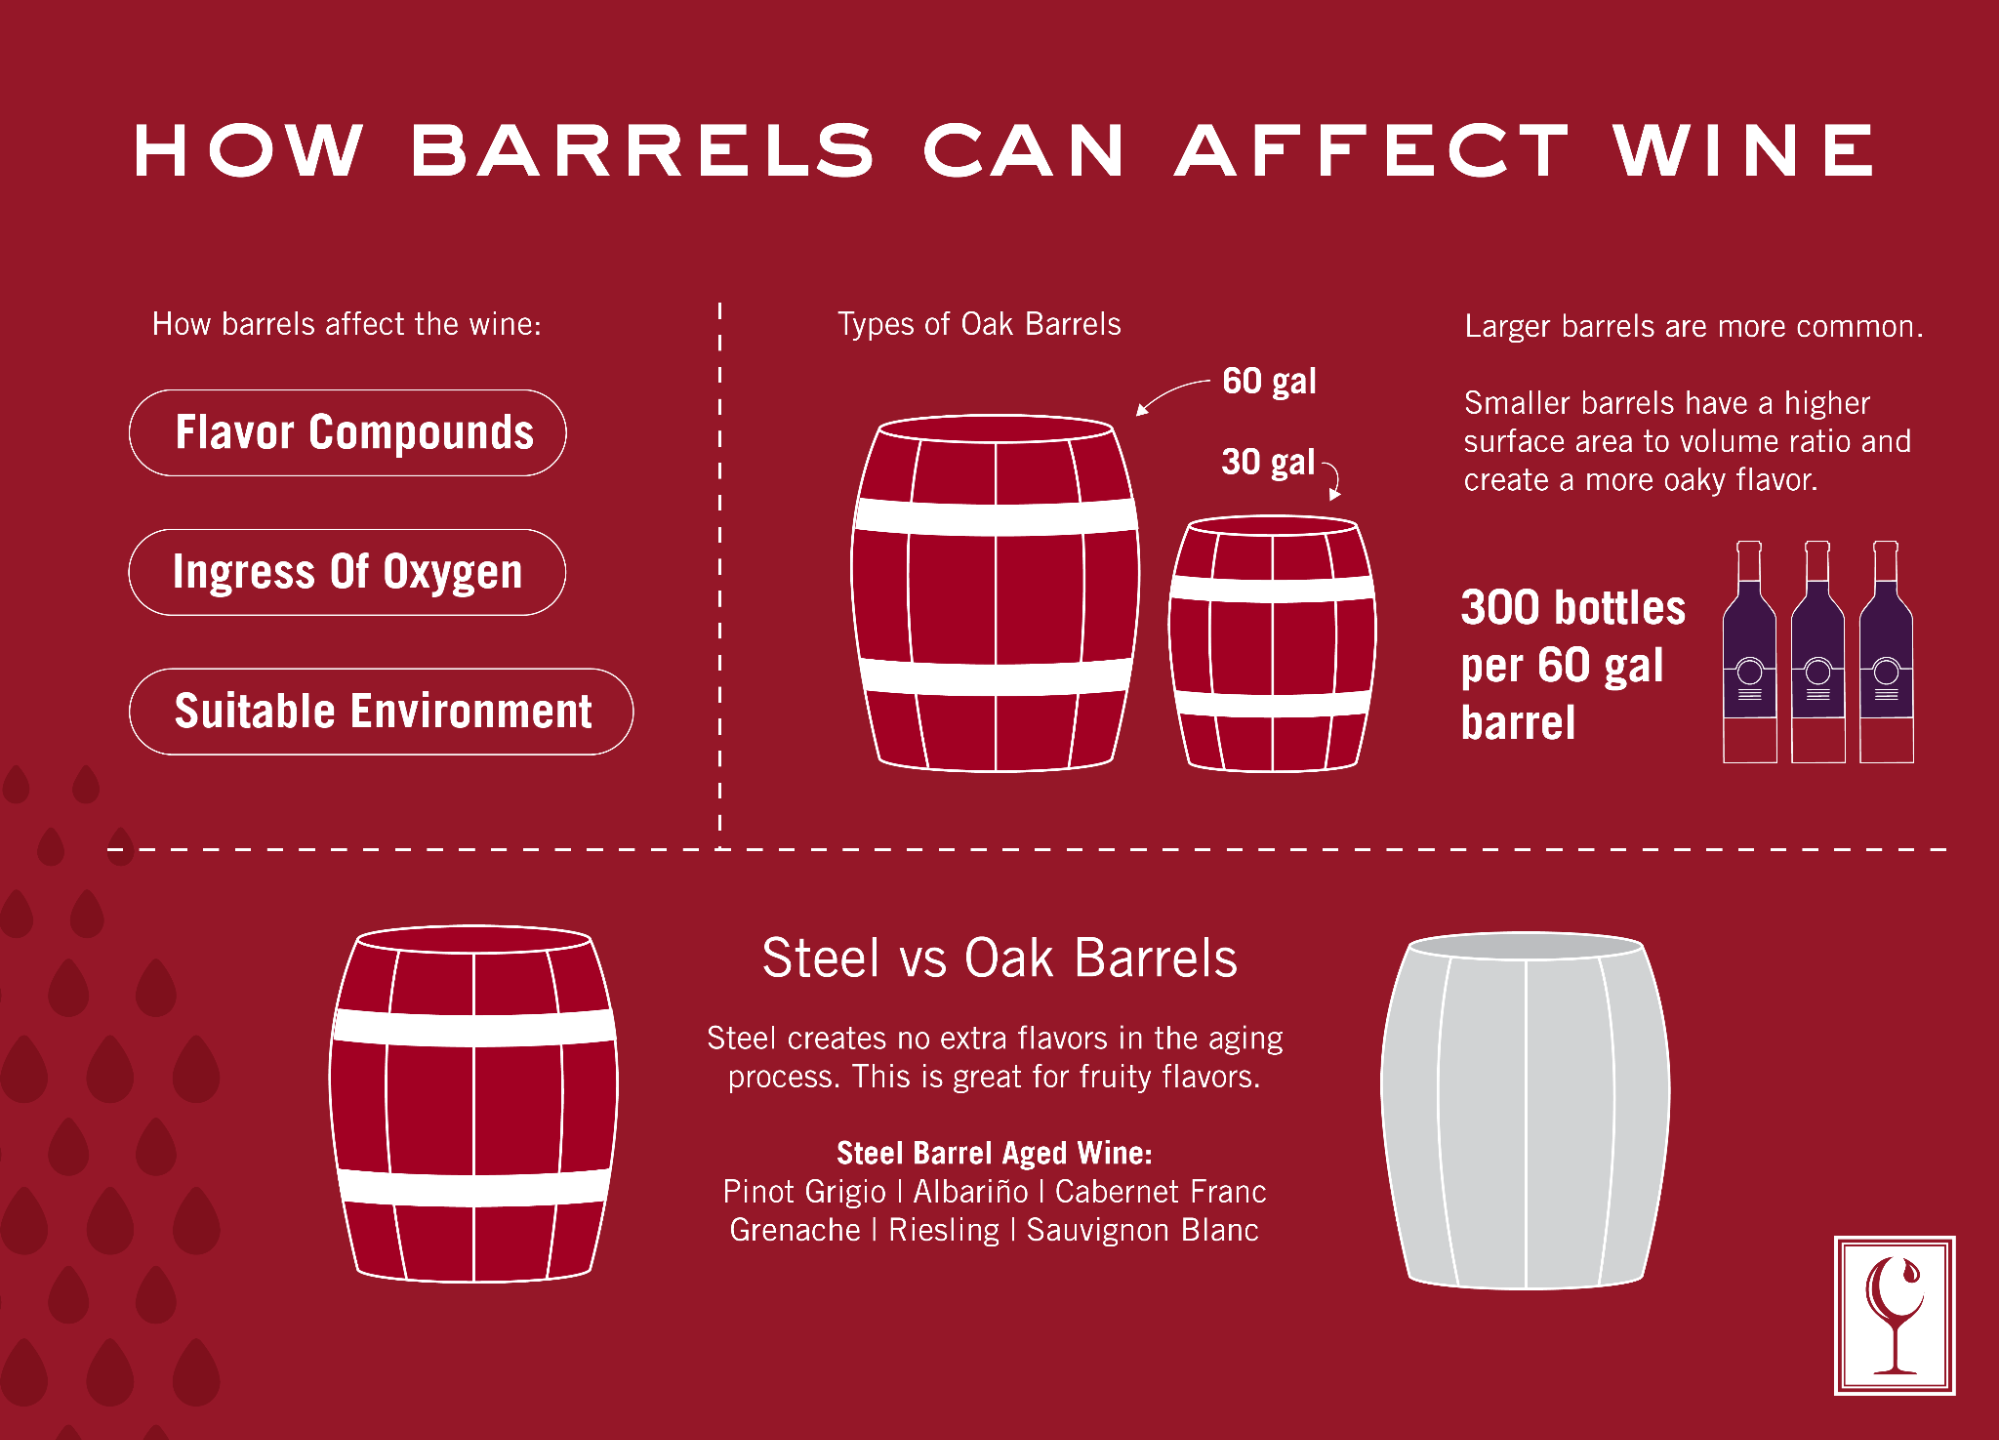 How barrels can affect wine